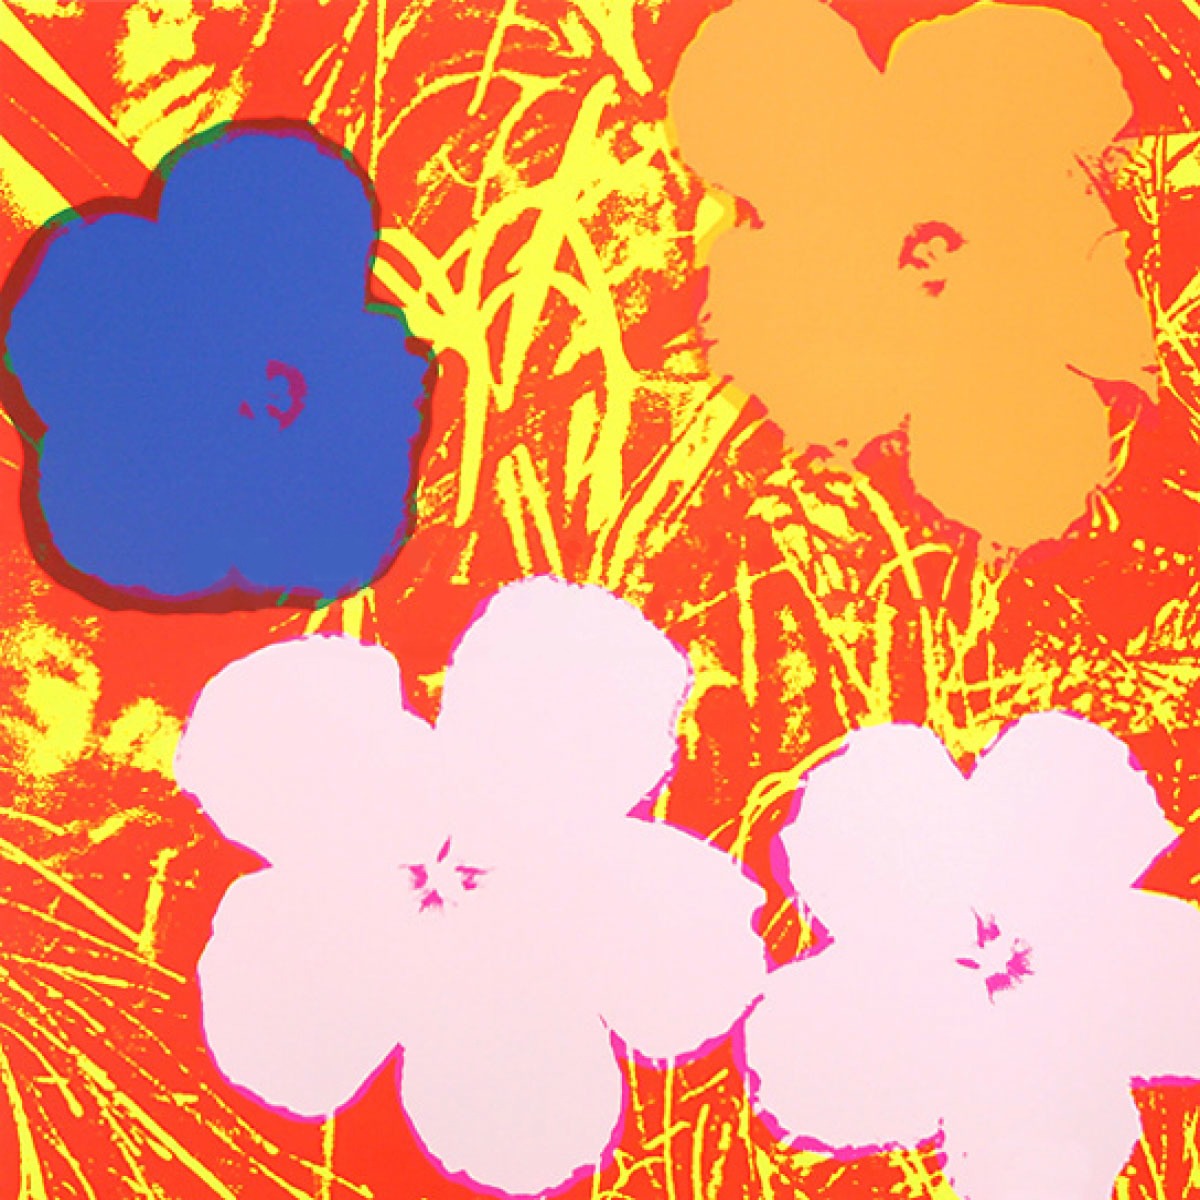 Andy Warhol Flowers 69